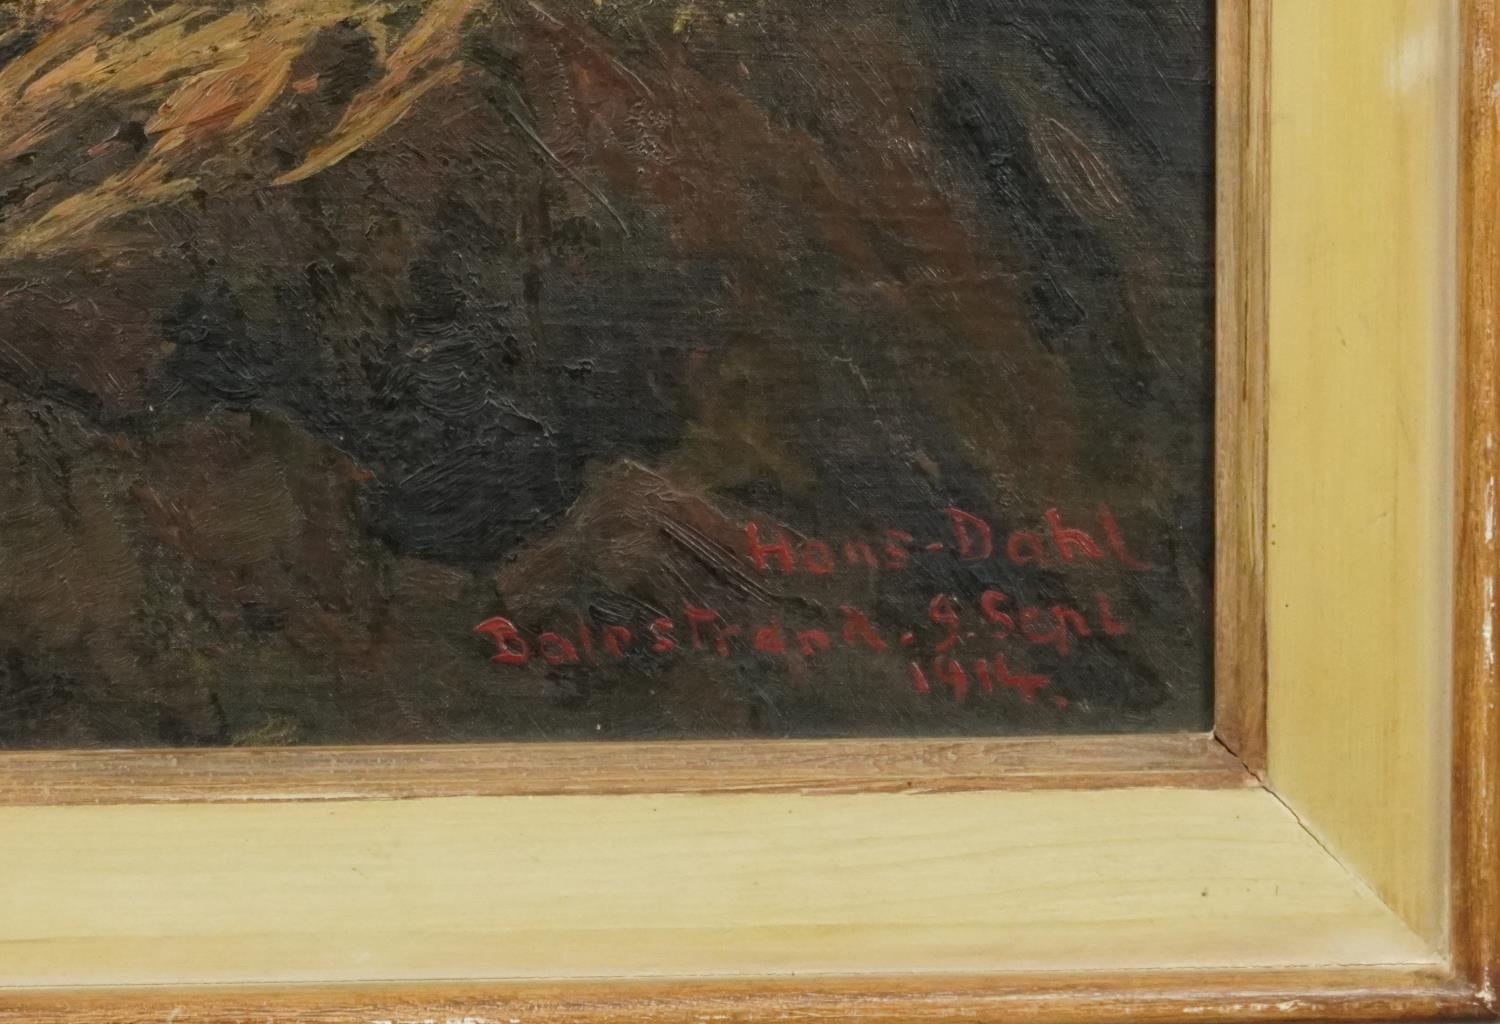 Hans Dahl 1914 - Balestrand Waterfall, early 20th century Norwegian school oil on board, inscribed - Image 3 of 5